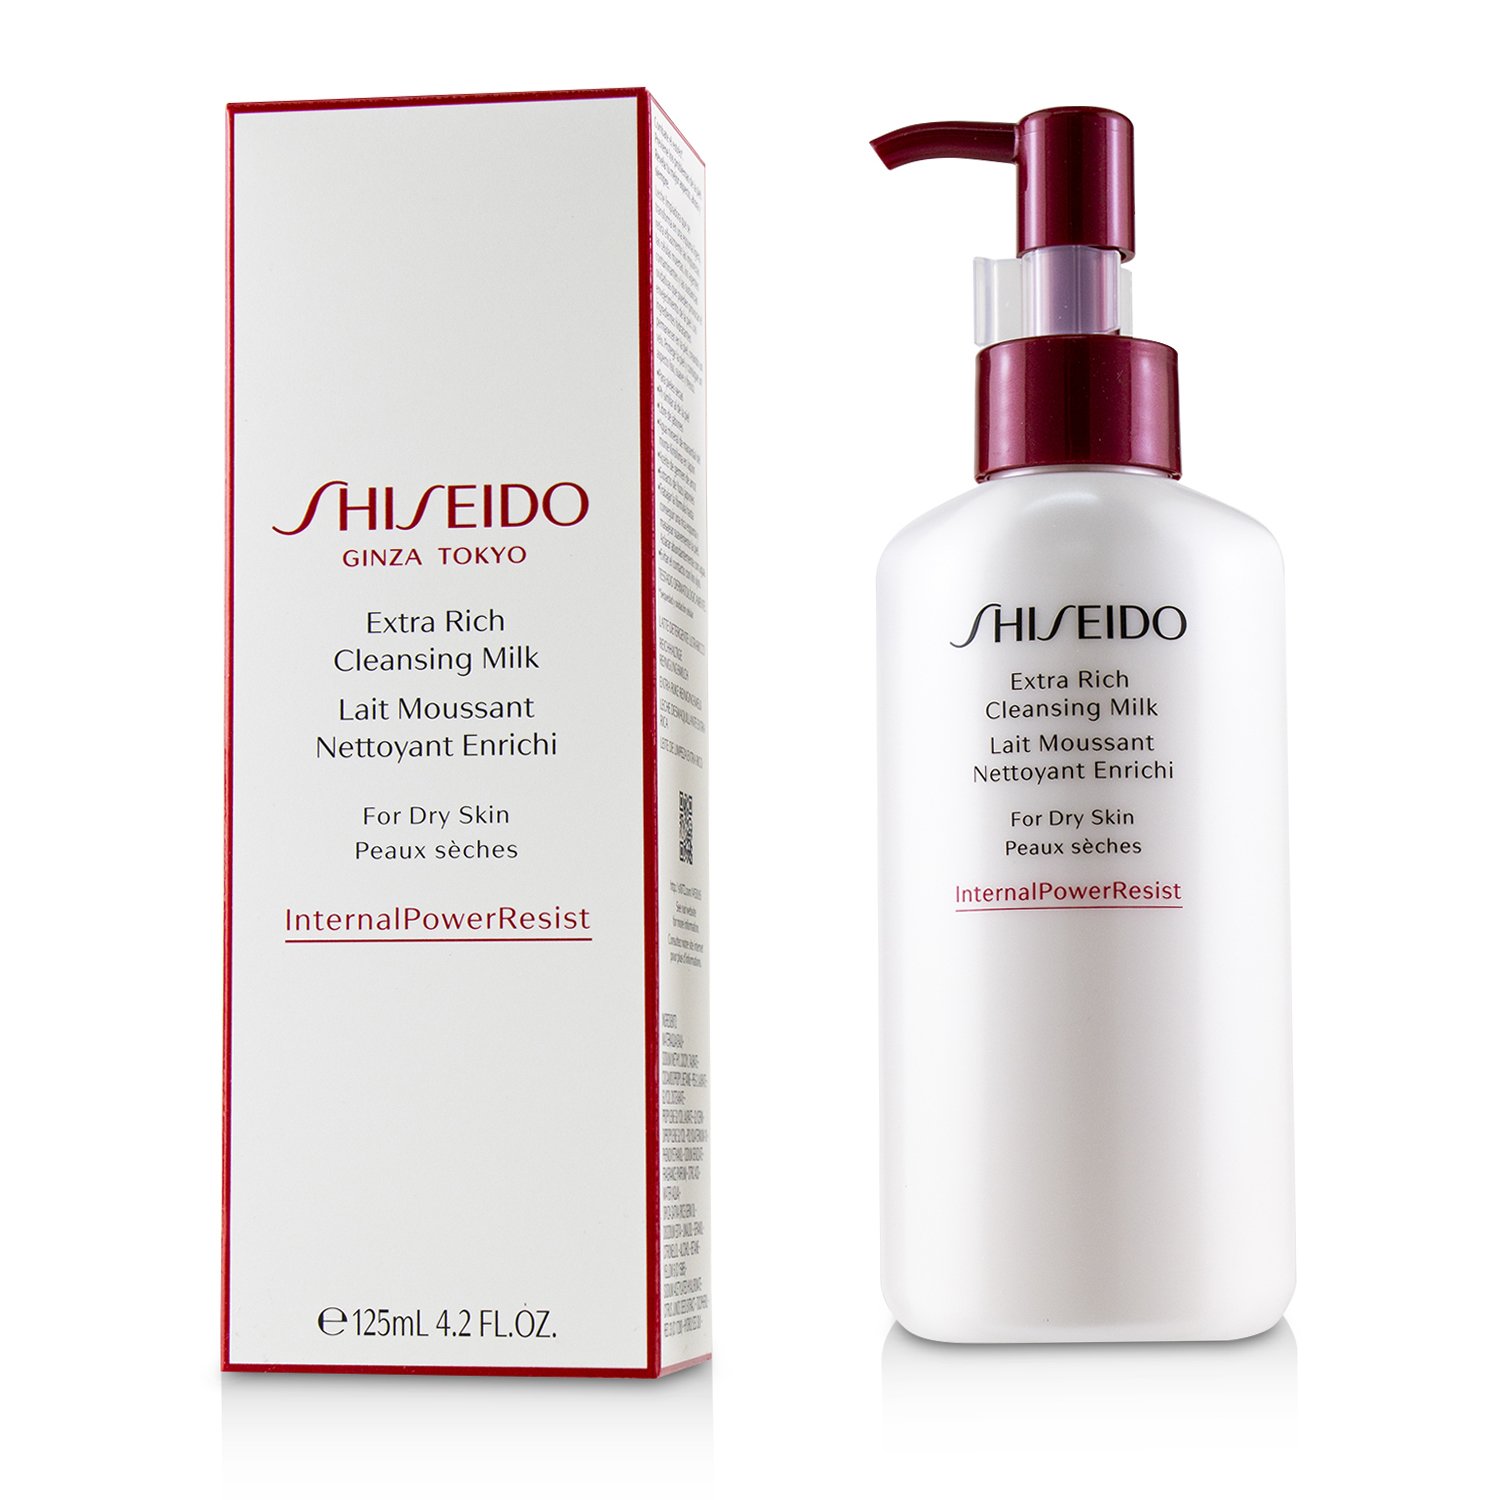 資生堂 Shiseido - 資生堂潤澤潔膚乳 125ml